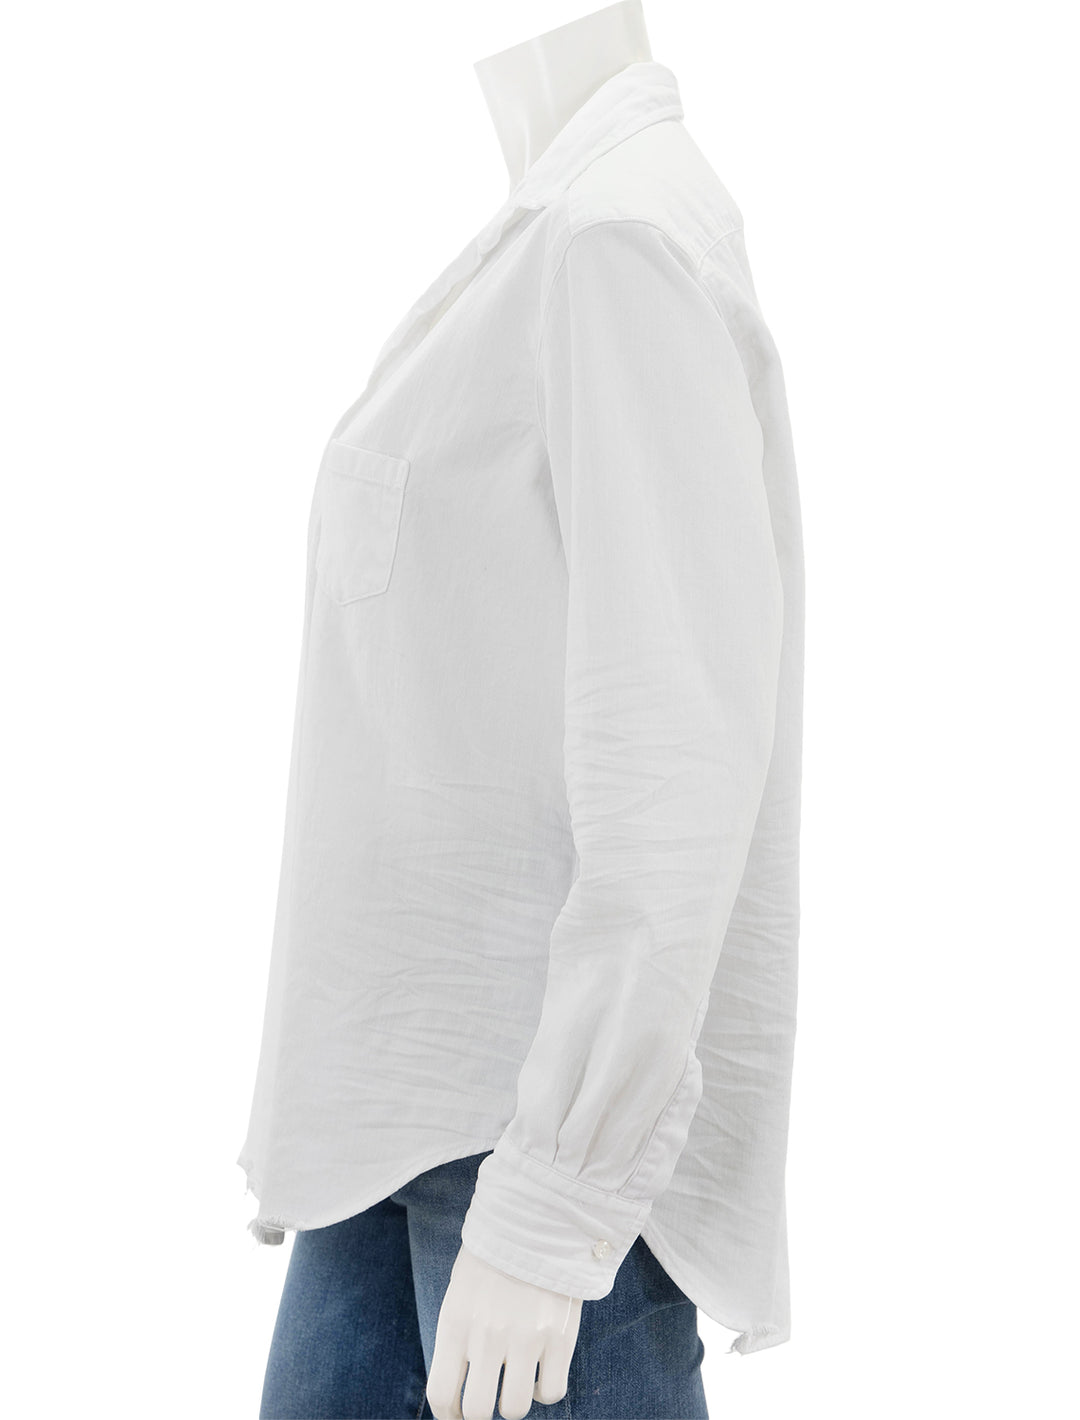 Side view of Frank & Eileen's eileen shirt in distressed white denim.